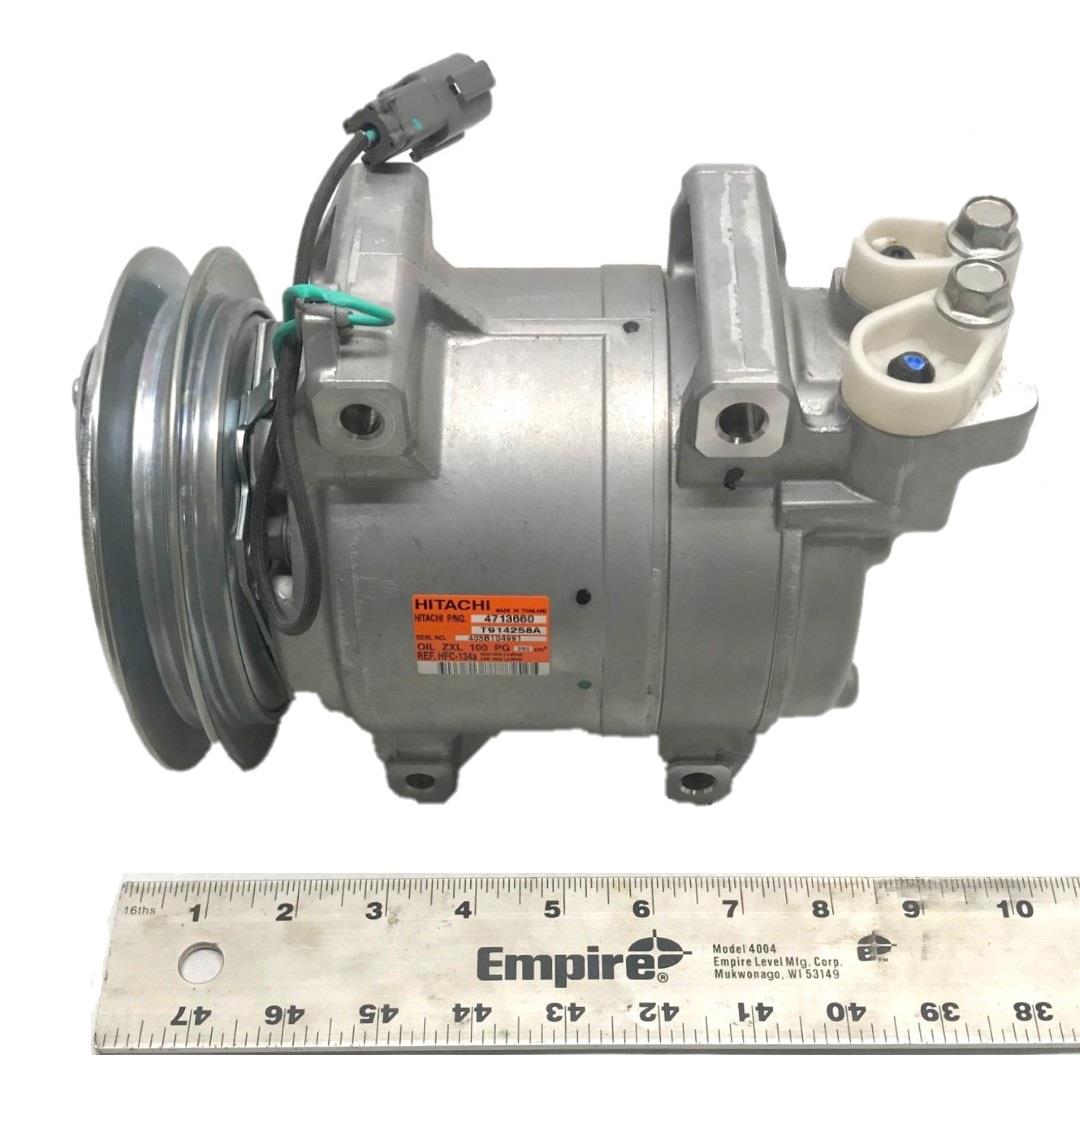 SP-2142 | SP-2142 Air Conditioner Compressor (12) (Large).jpg